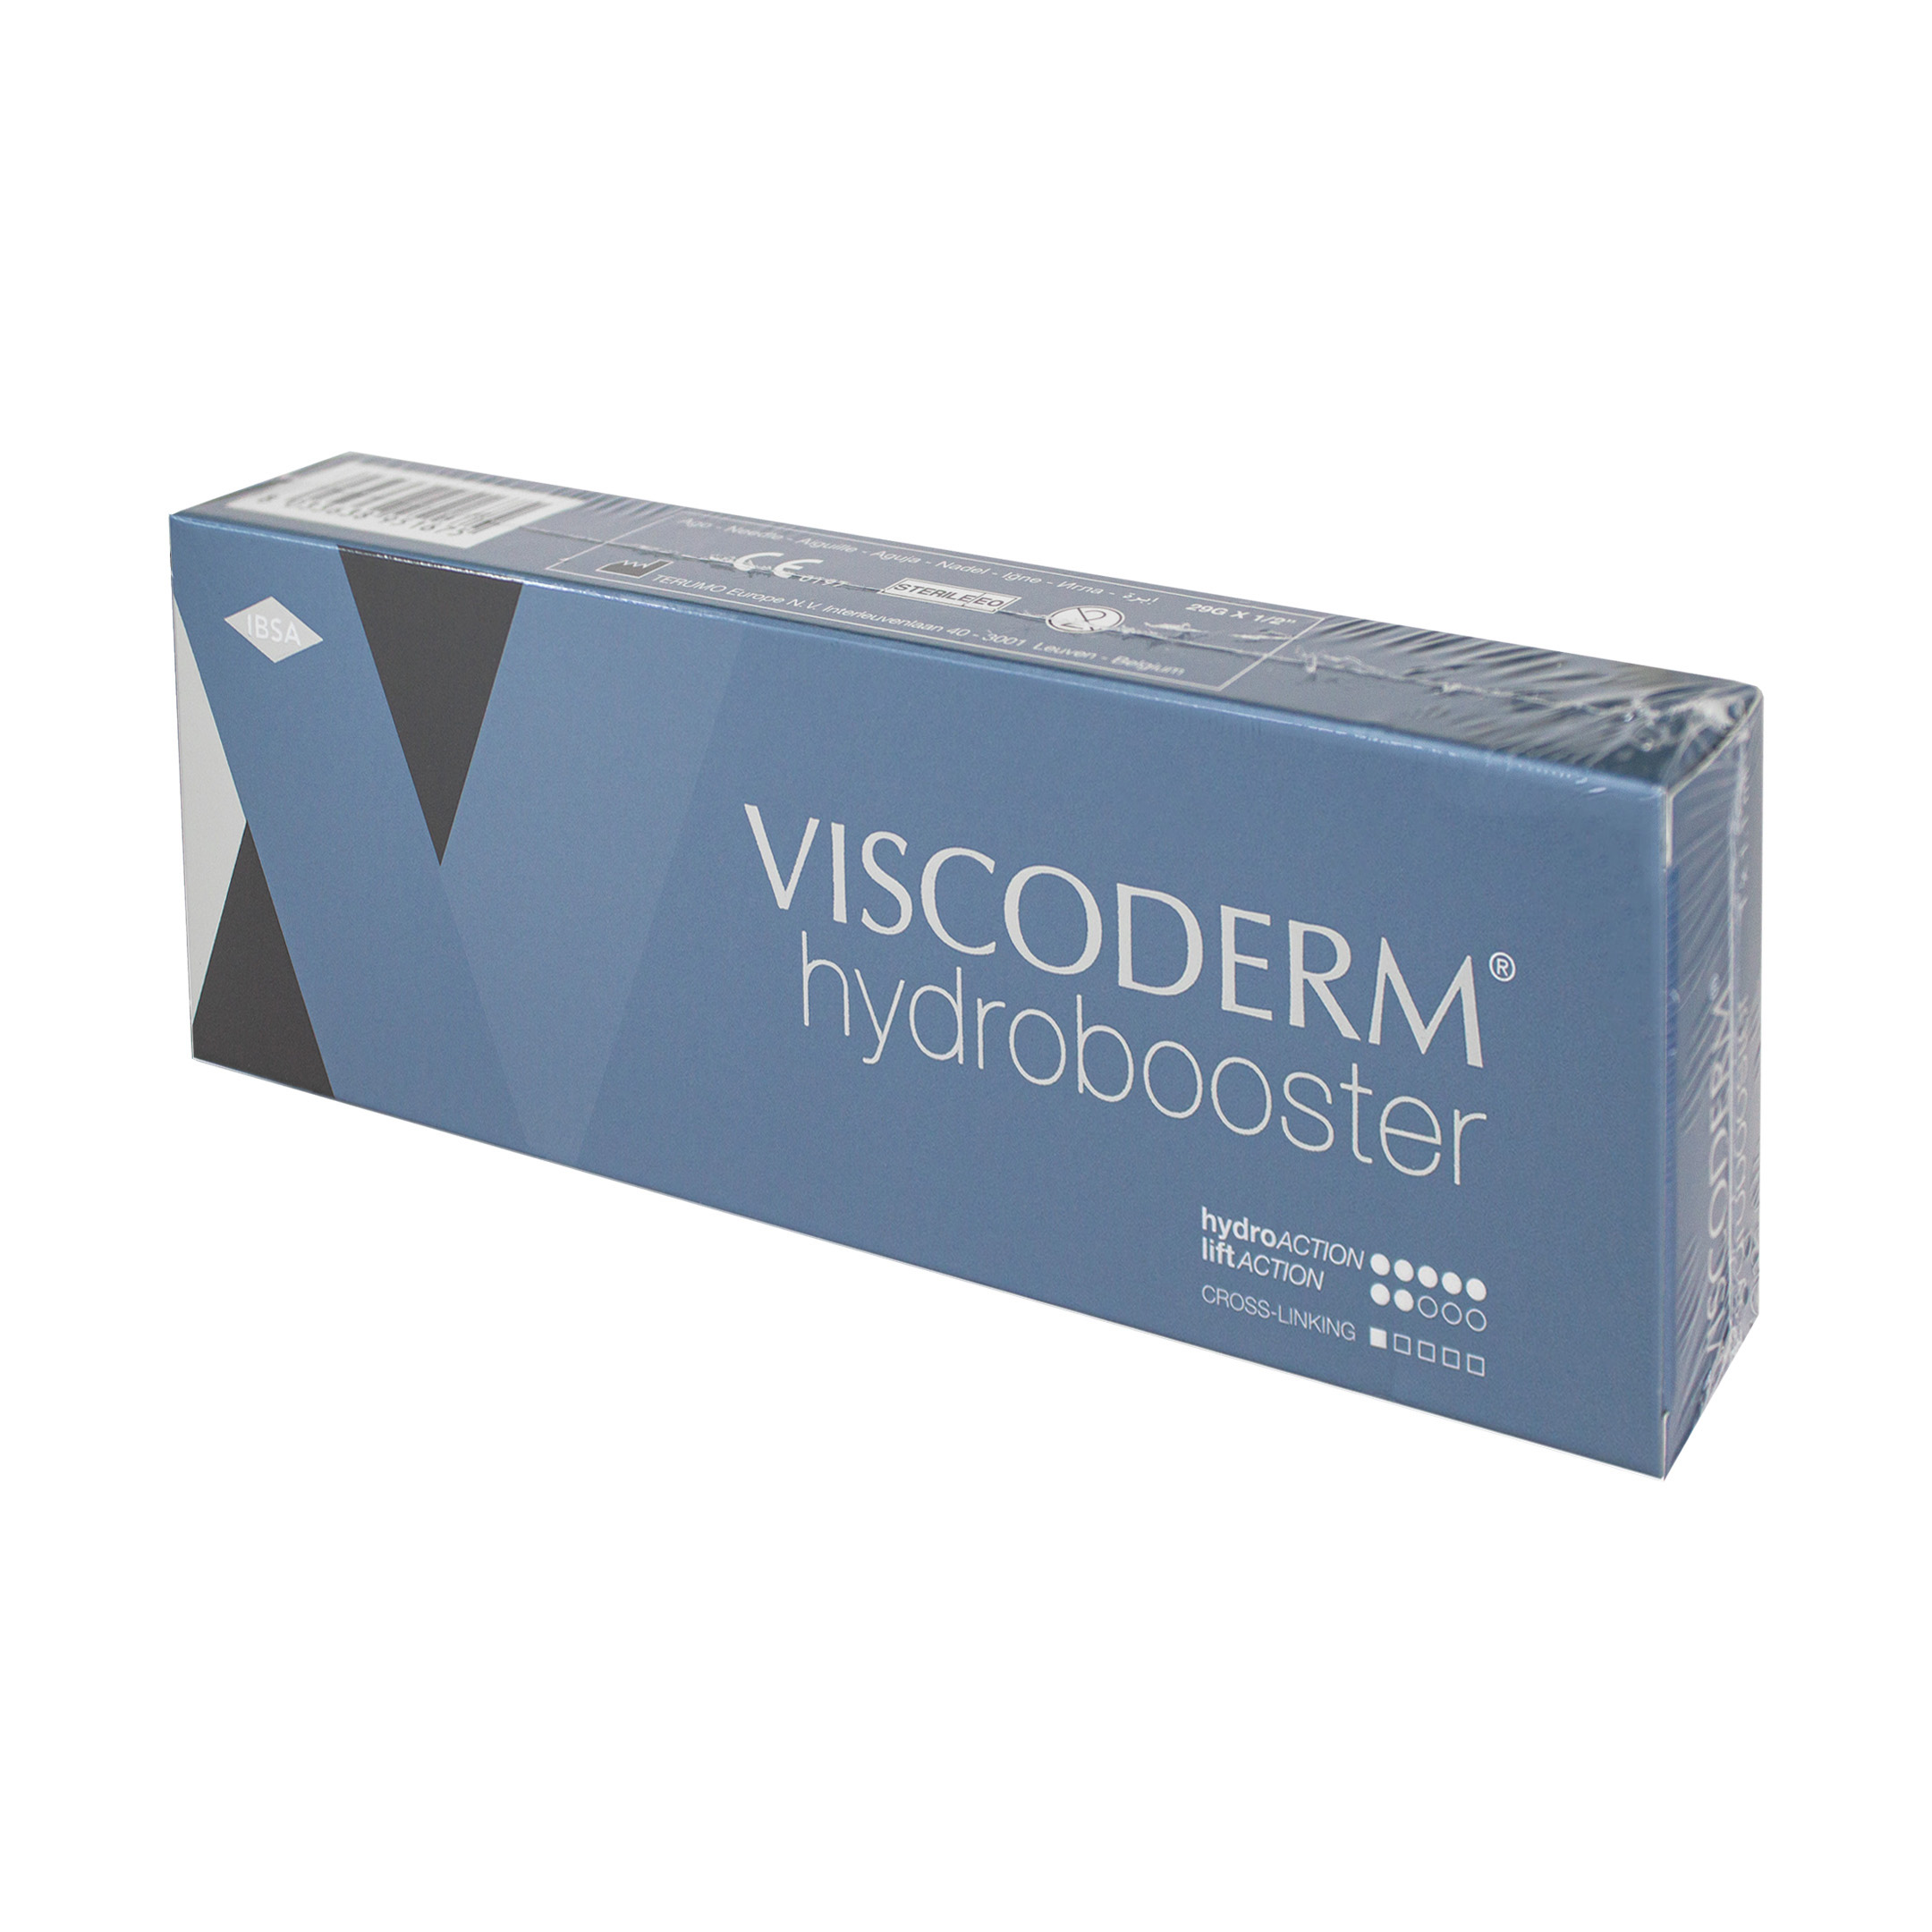 Viscoderm Hydrobooster side